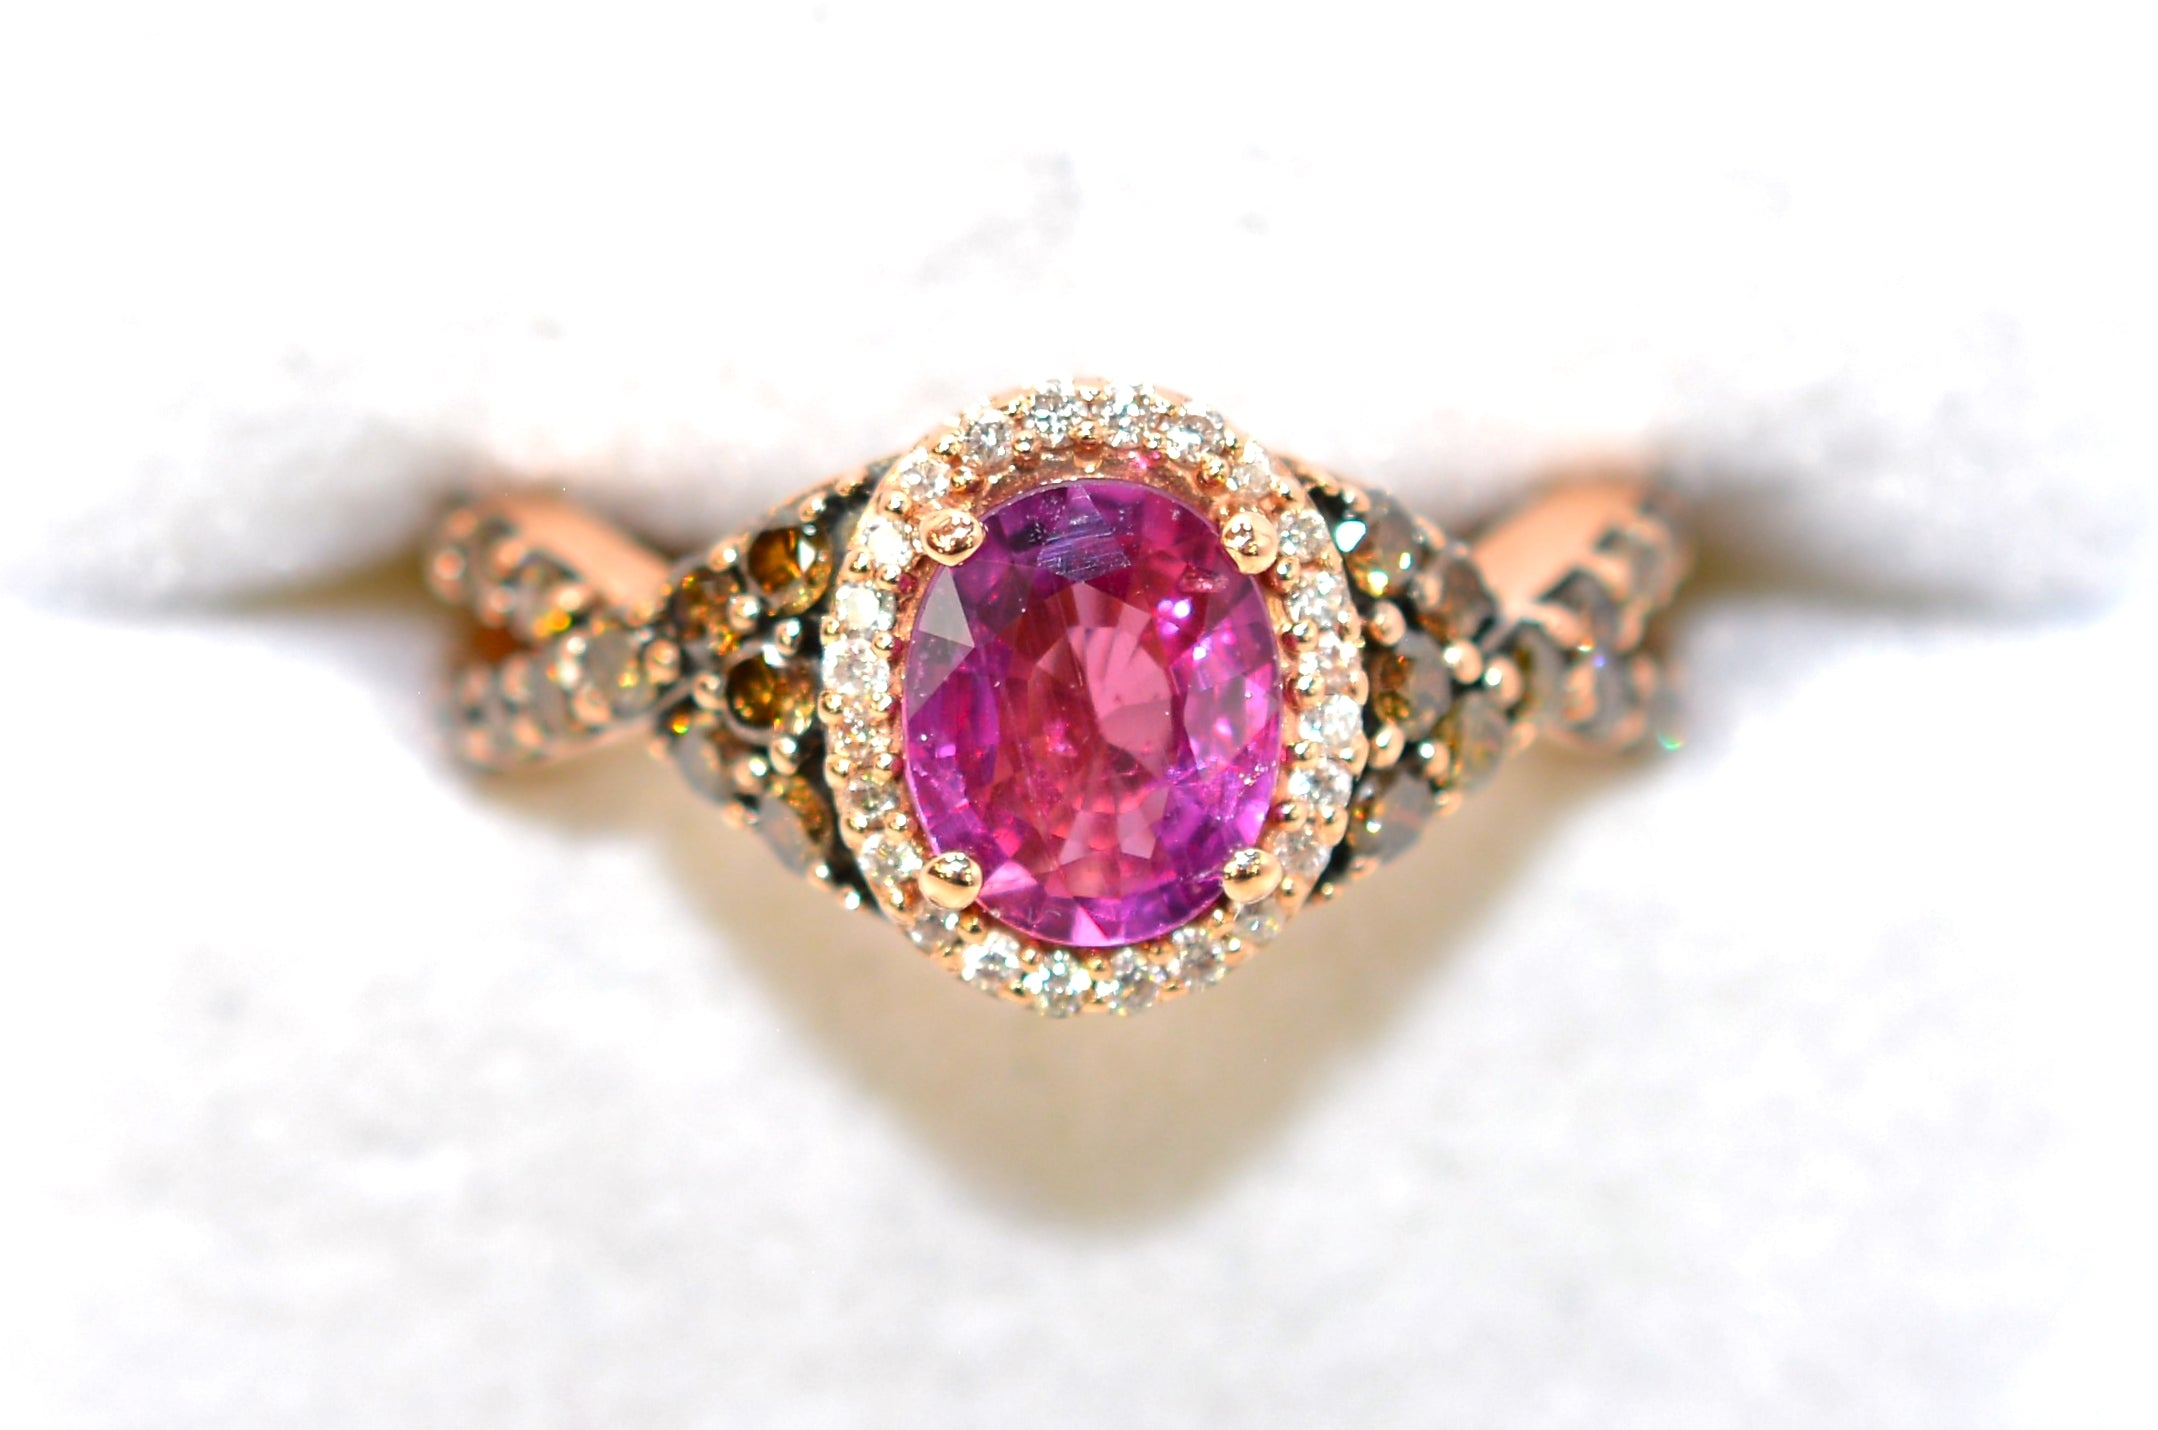 LeVian Natural Magenta Umba Sapphire & Diamond Ring 14K Solid Rose Gold 1.82tcw Sapphire Ring Statement Ring Statement Ring Cocktail Ring